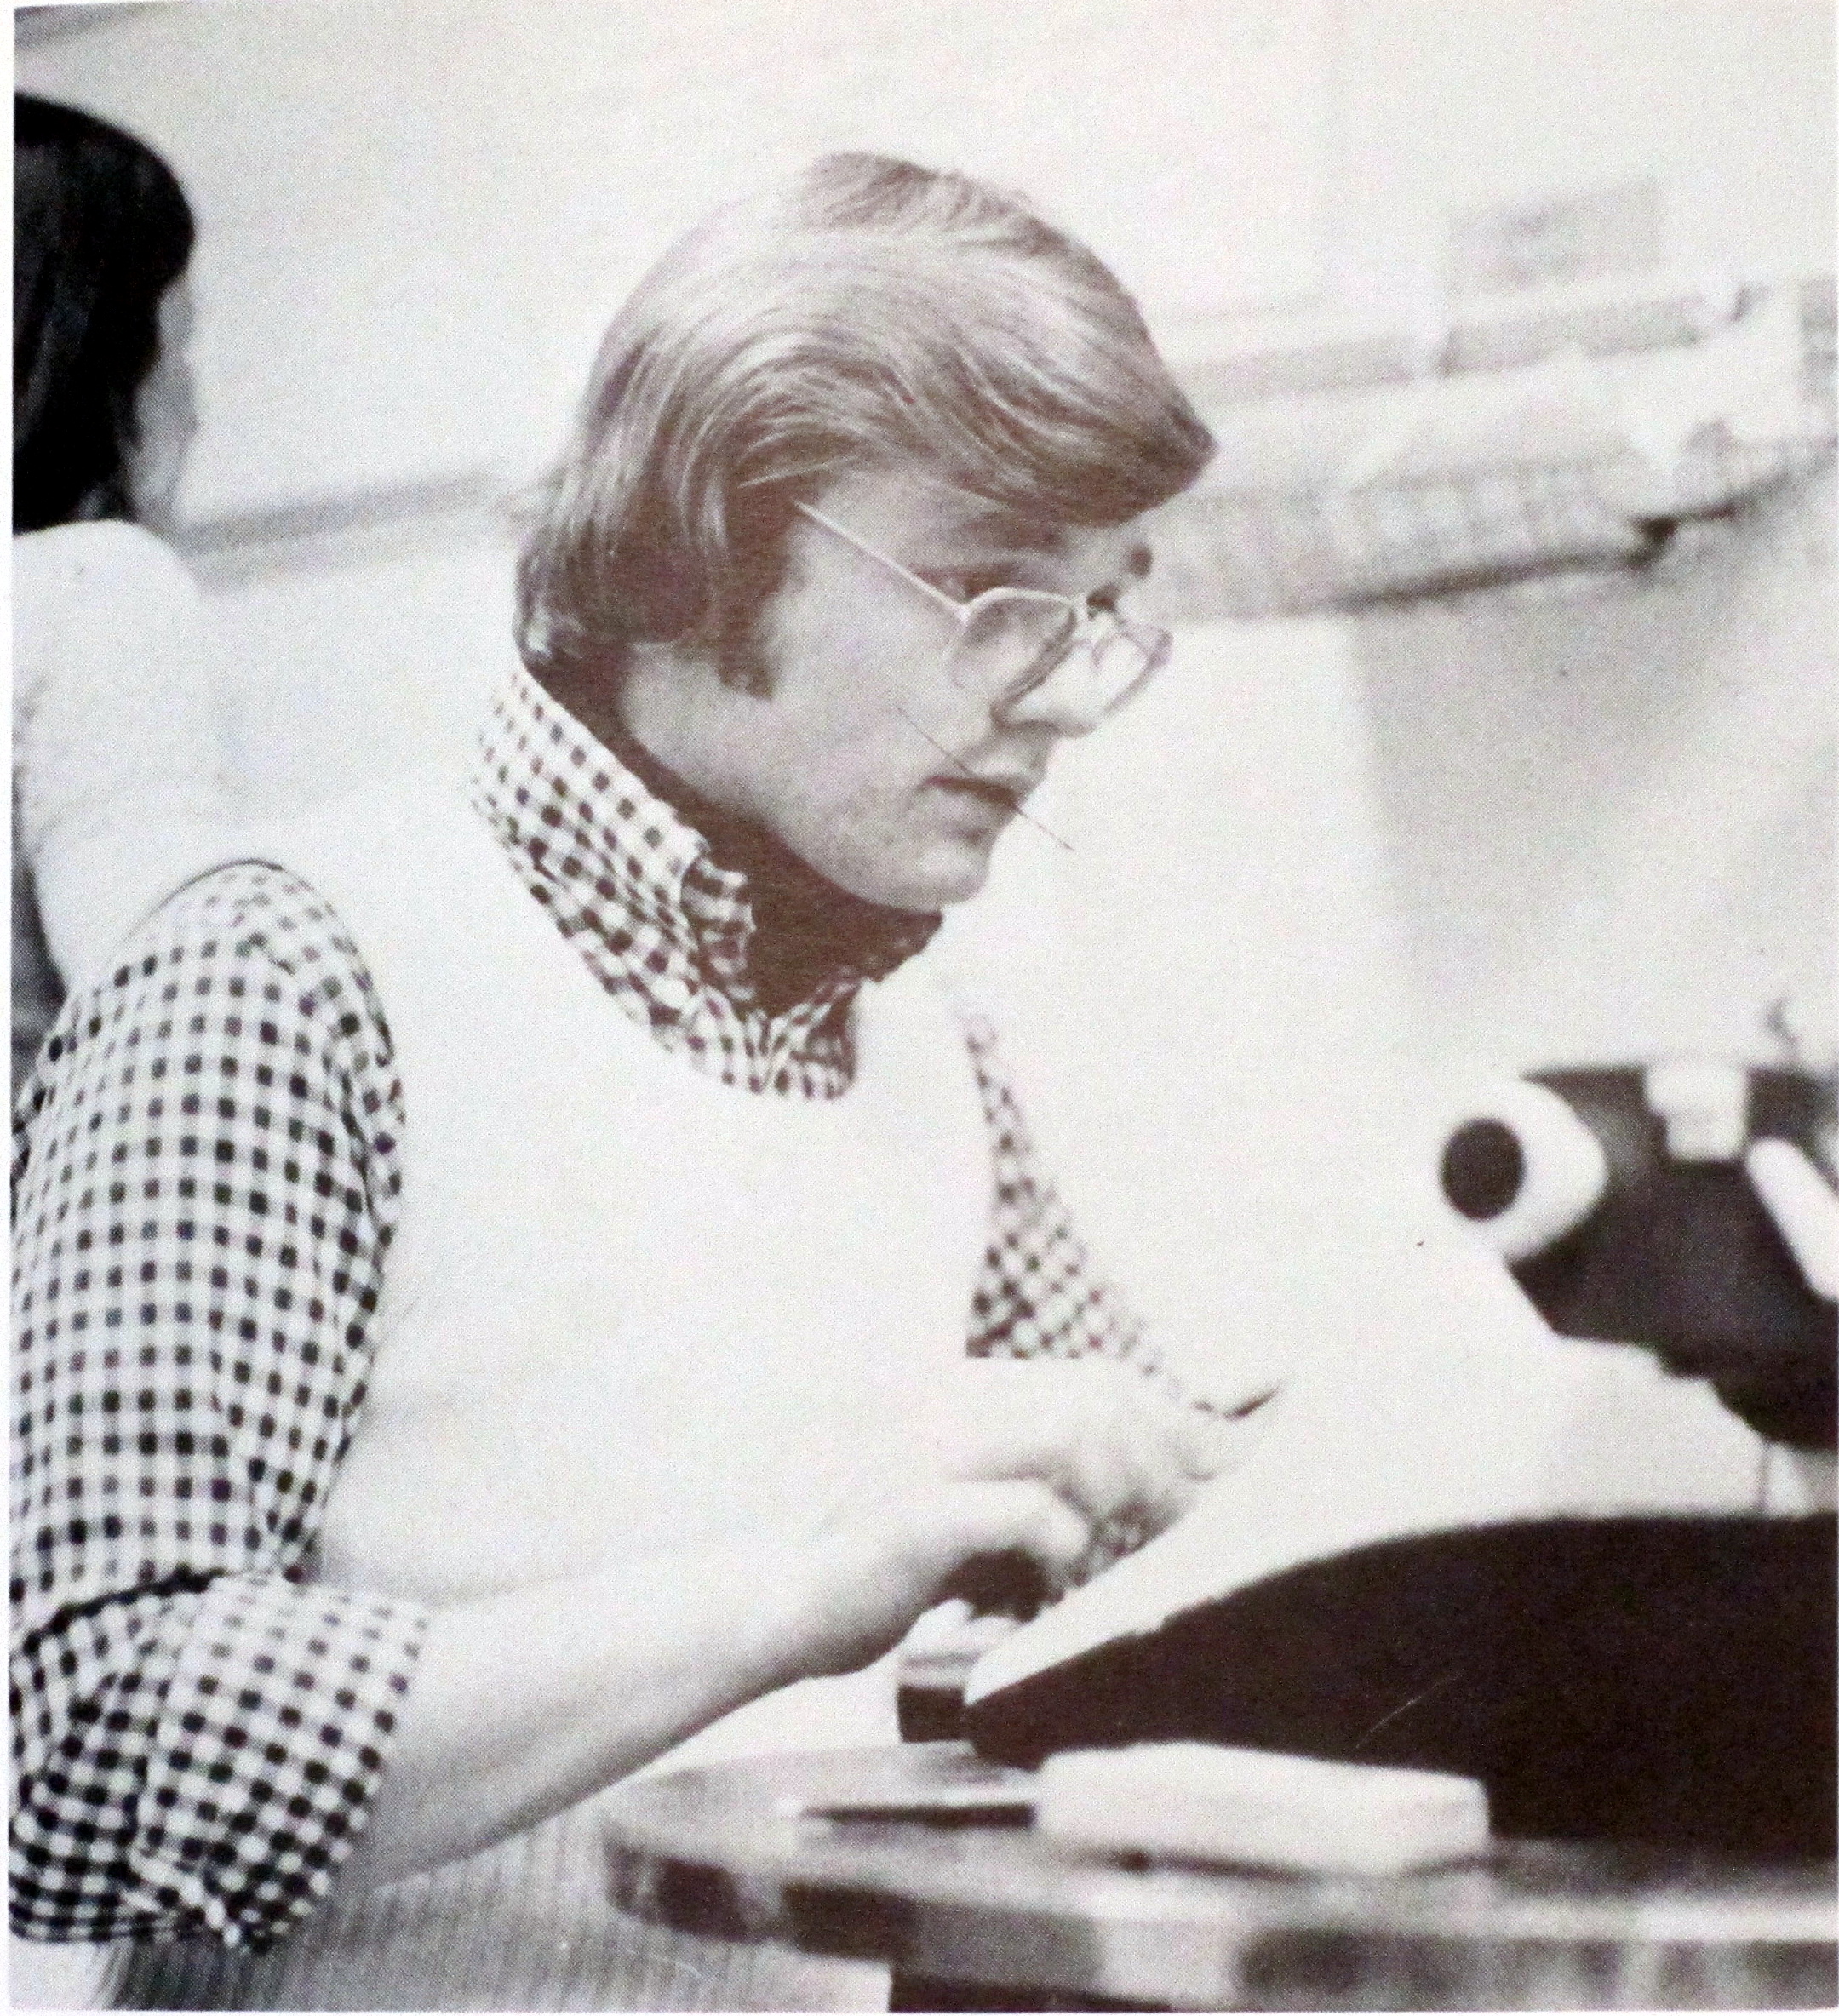 1976 Mike Blishak - News Director